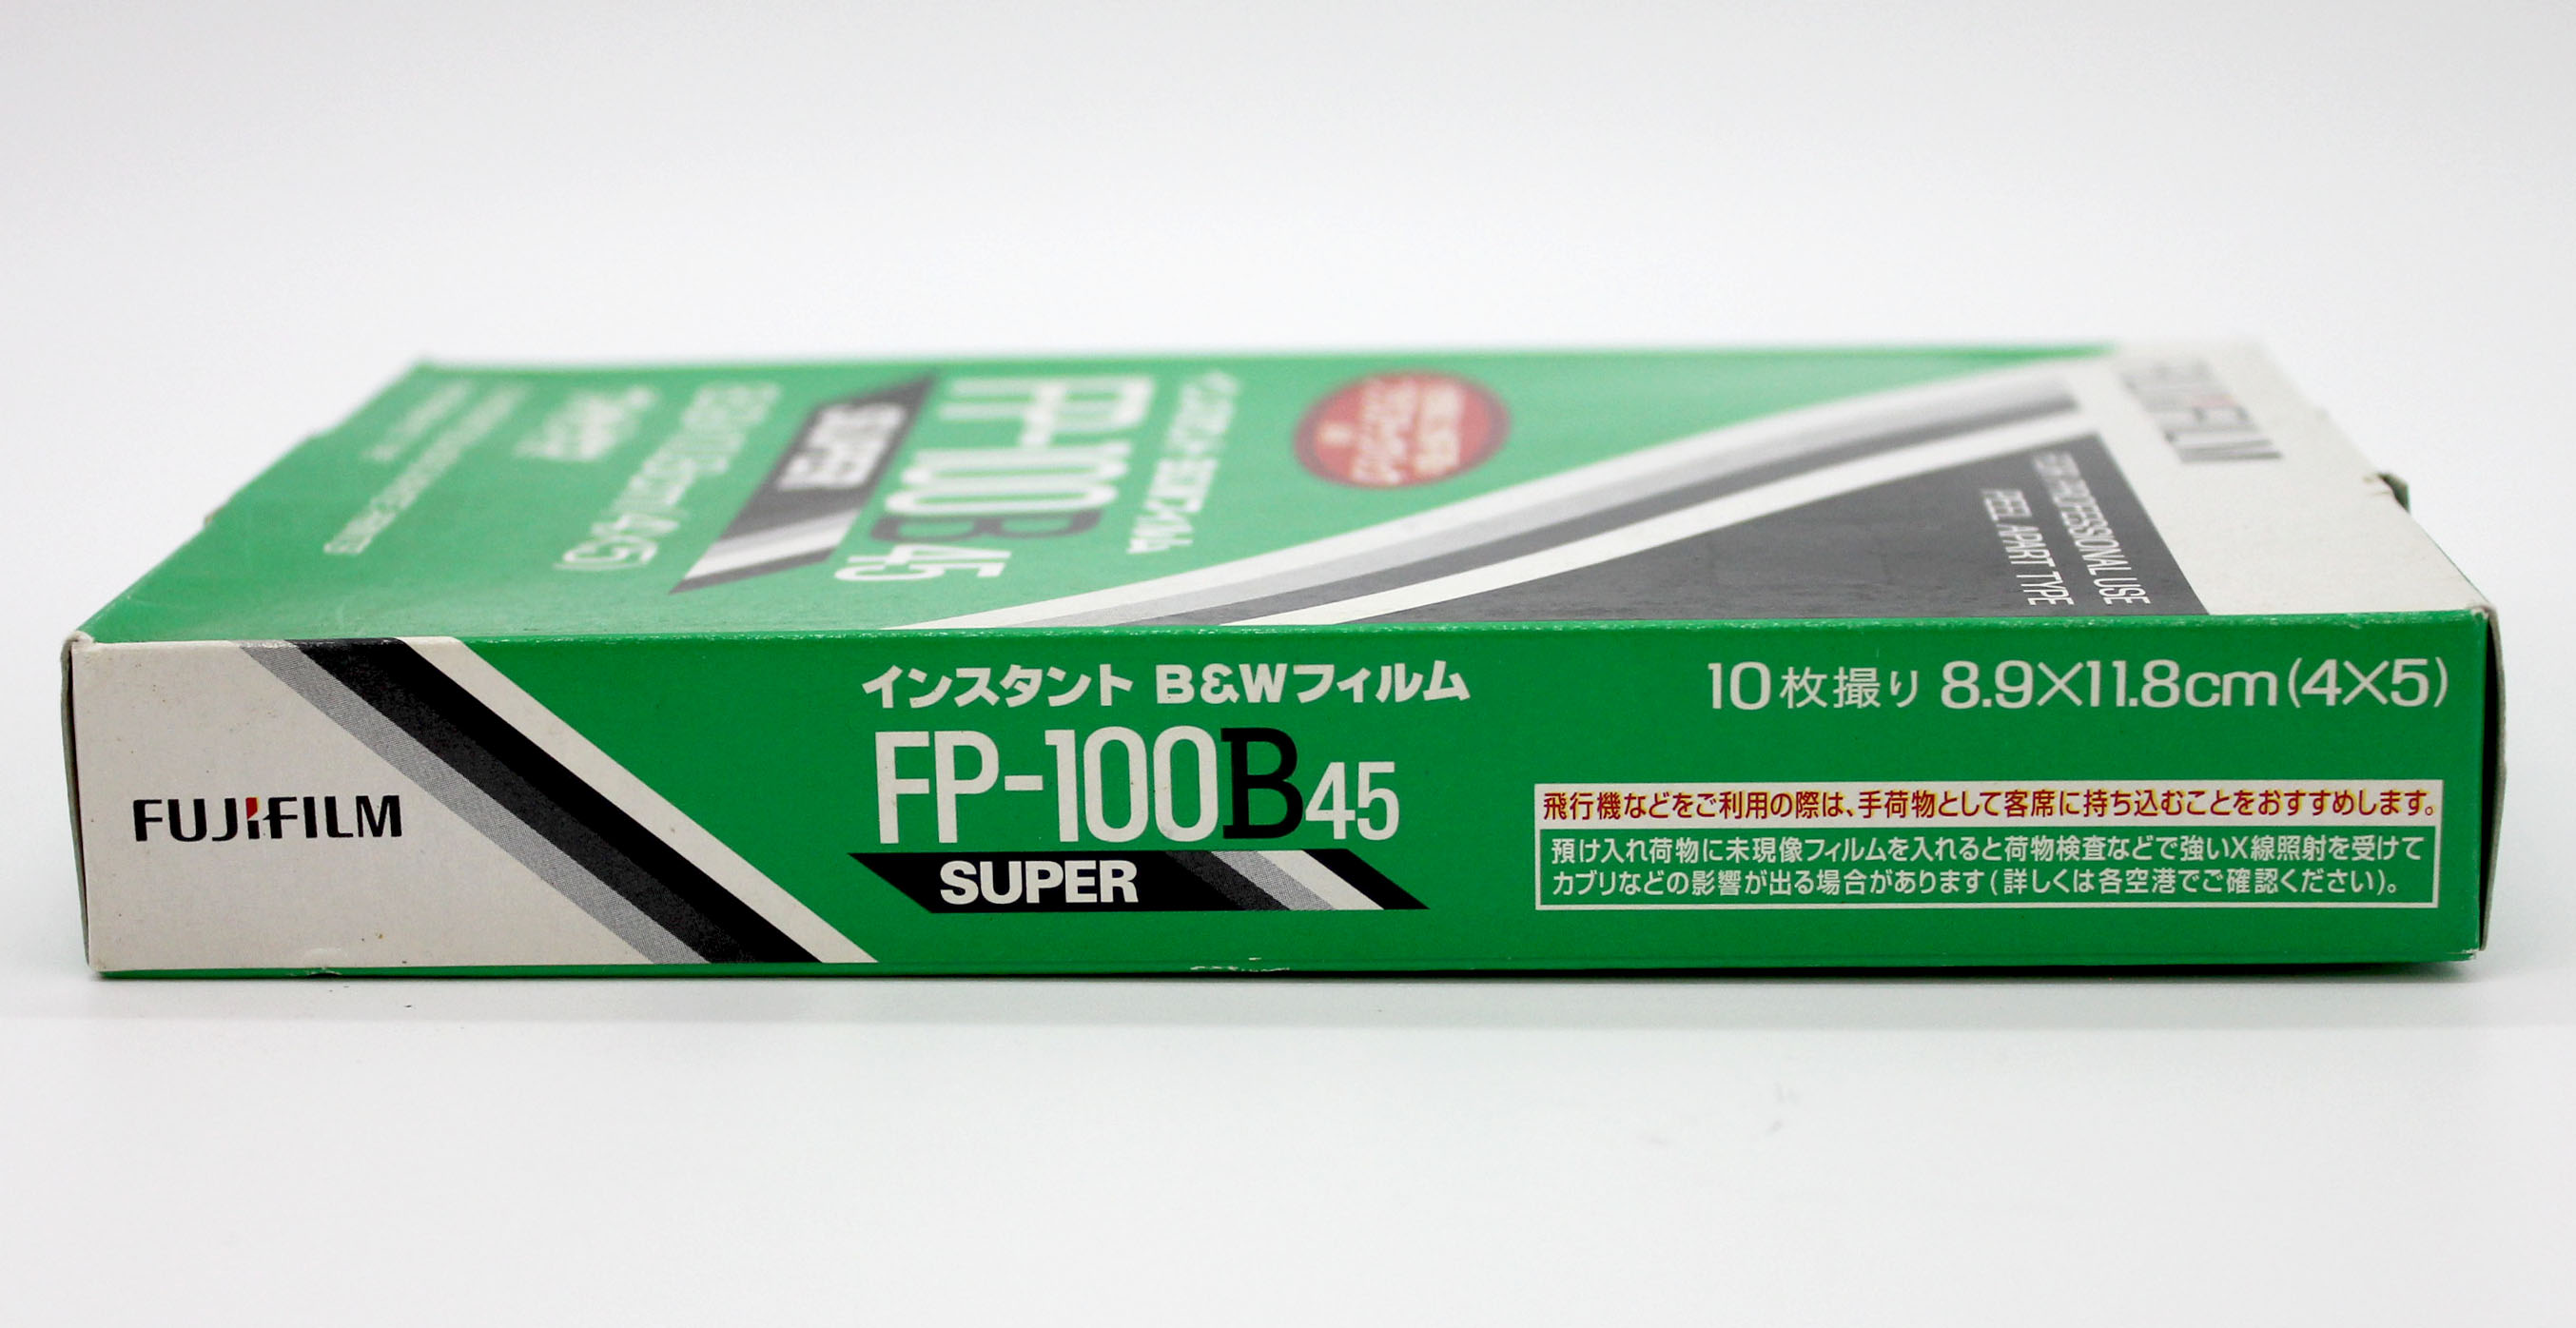  Fuji Fujifilm FP-100B45 4x5 8.9x11.8cm Instant Black & White Film (EXP 6/2011) Photo 5